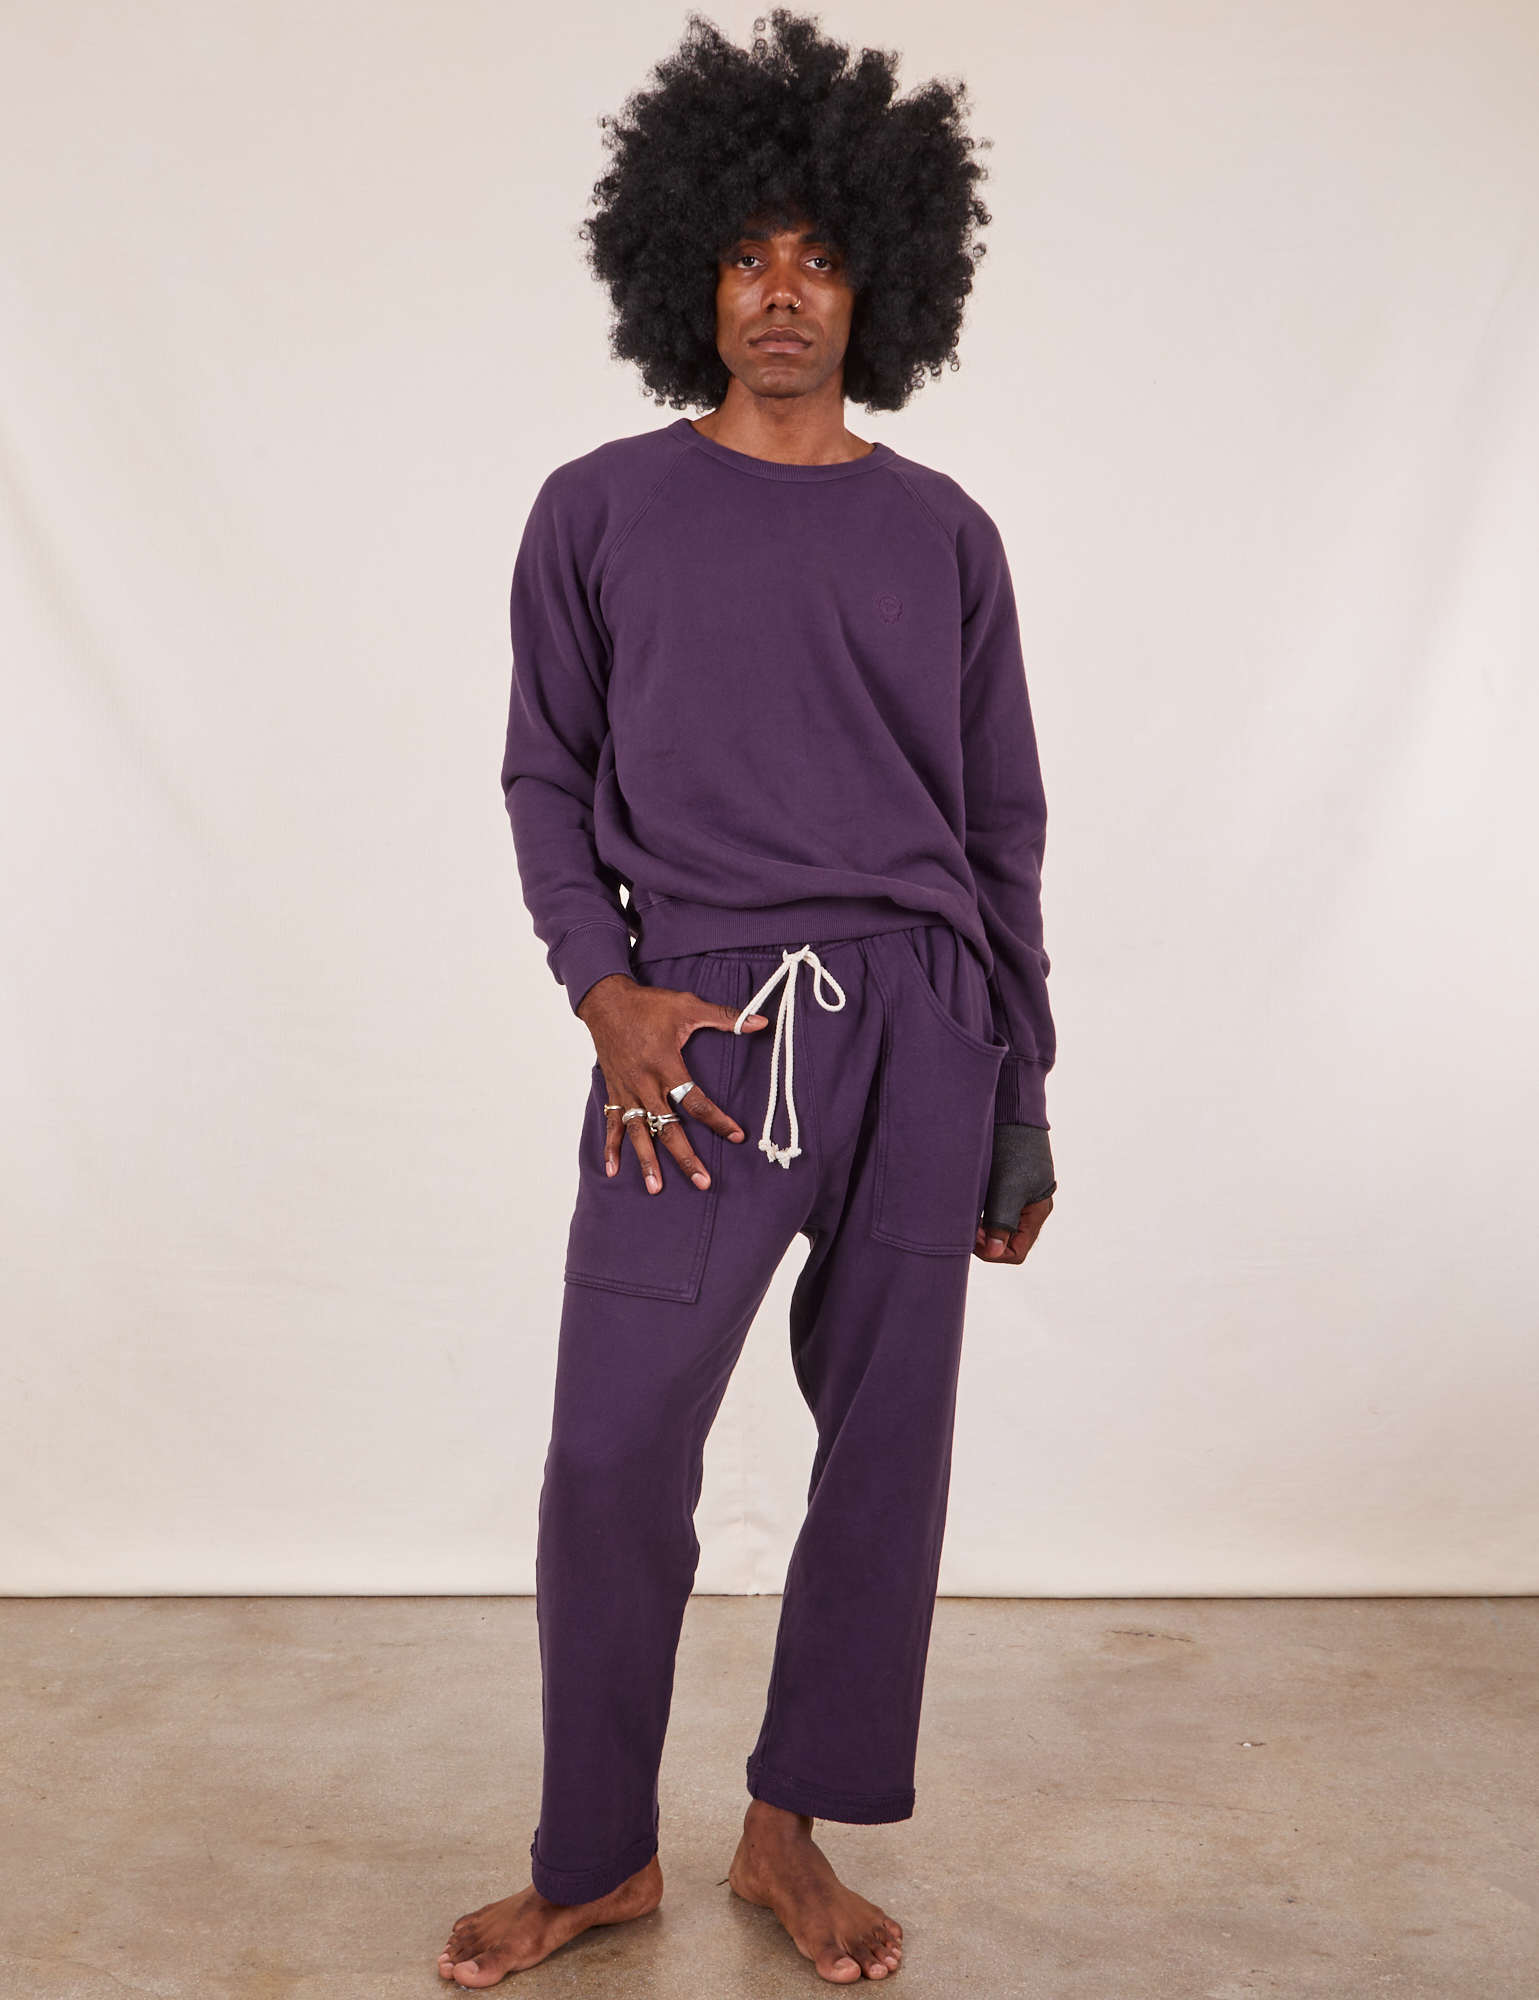 Jerrod is wearing Heavyweight Crew in Nebula Purple and Cropped Rolled Cuff Sweatpants